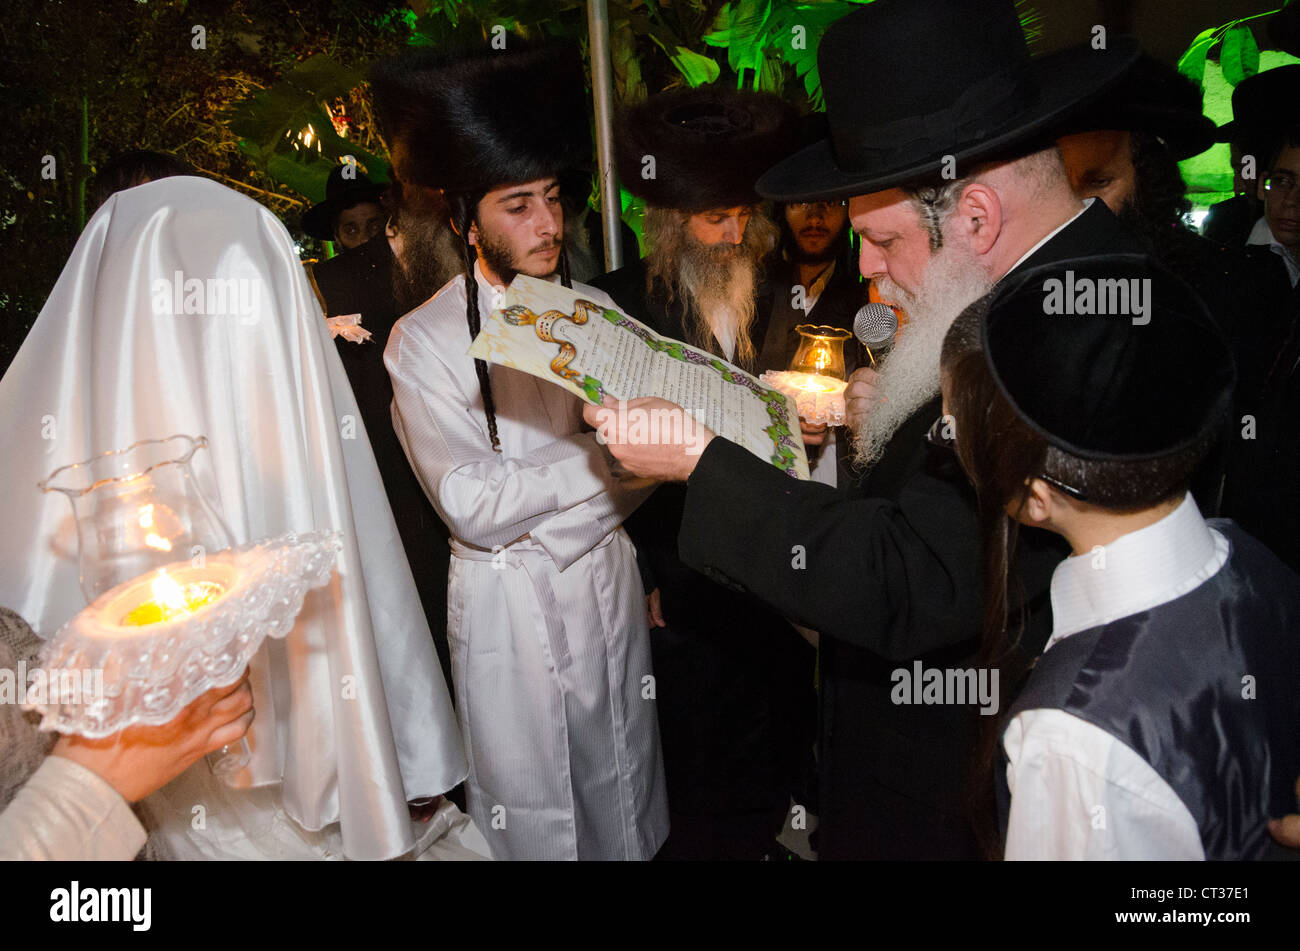 JERUSALEM, ISRAEL - JUNE 11: Jewish orthodox wedding on June 11, 2012 in Jerusalem. Israel. Stock Photo